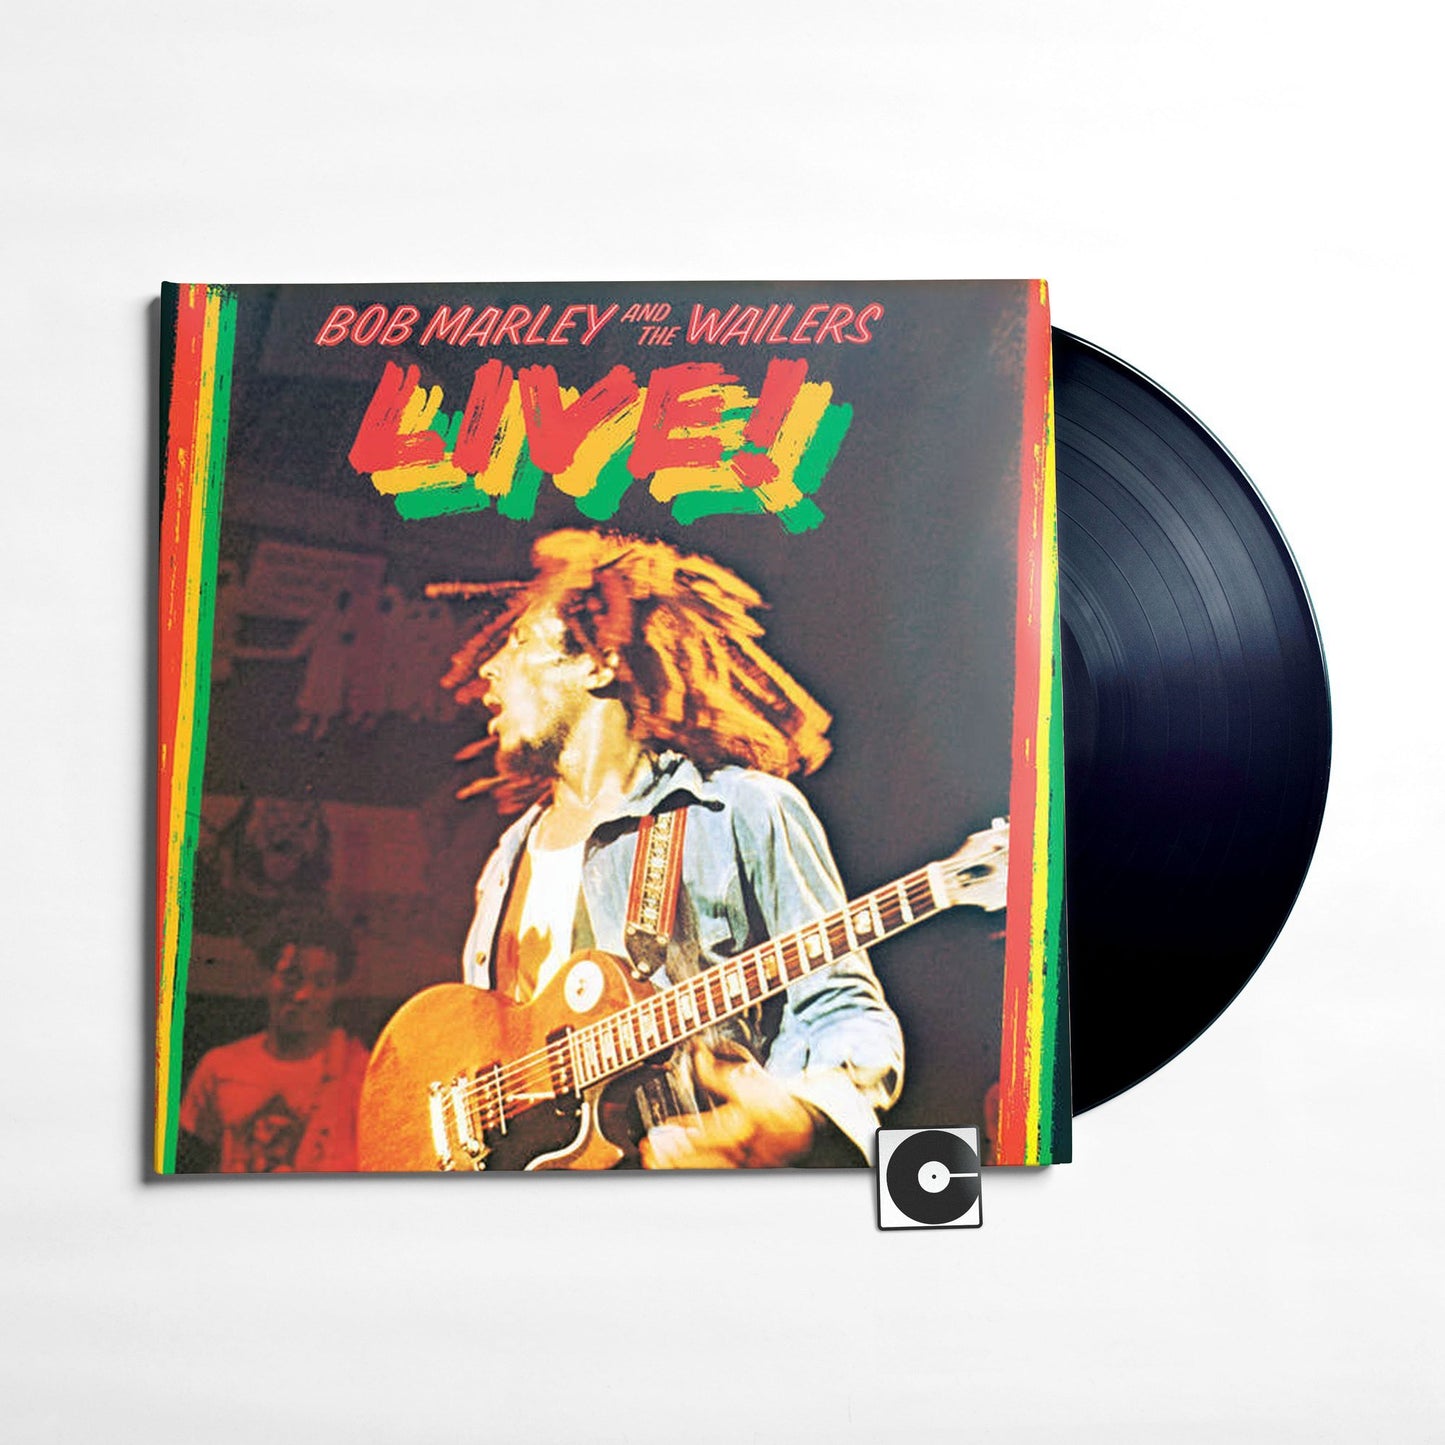 Bob Marley & The Wailers - "Live!"